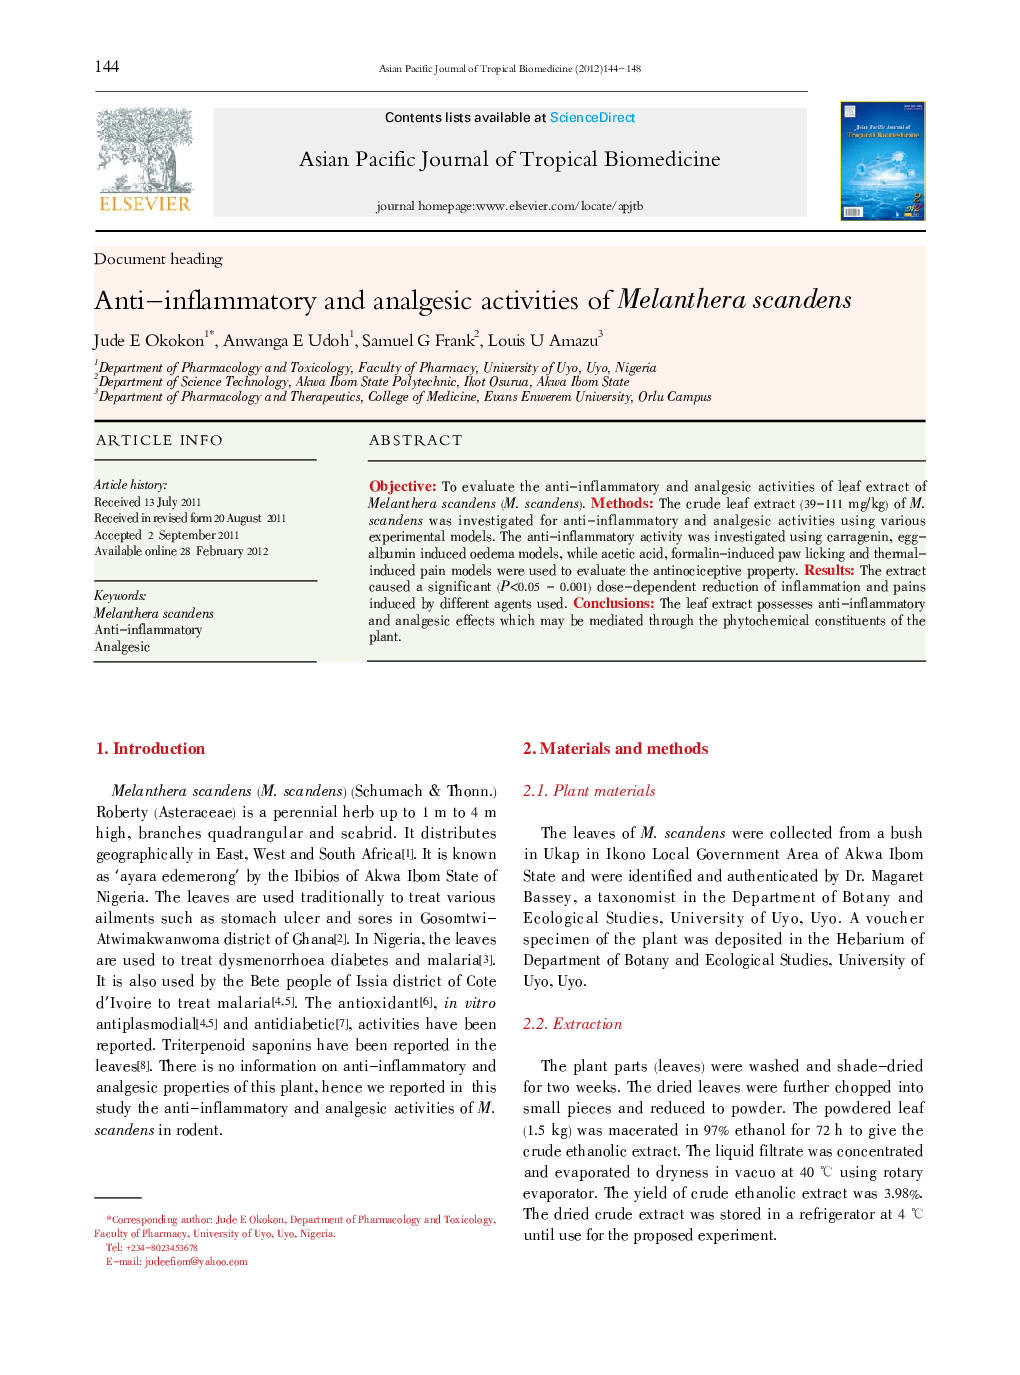 Anti-inflammatory and analgesic activities of Melanthera scandens